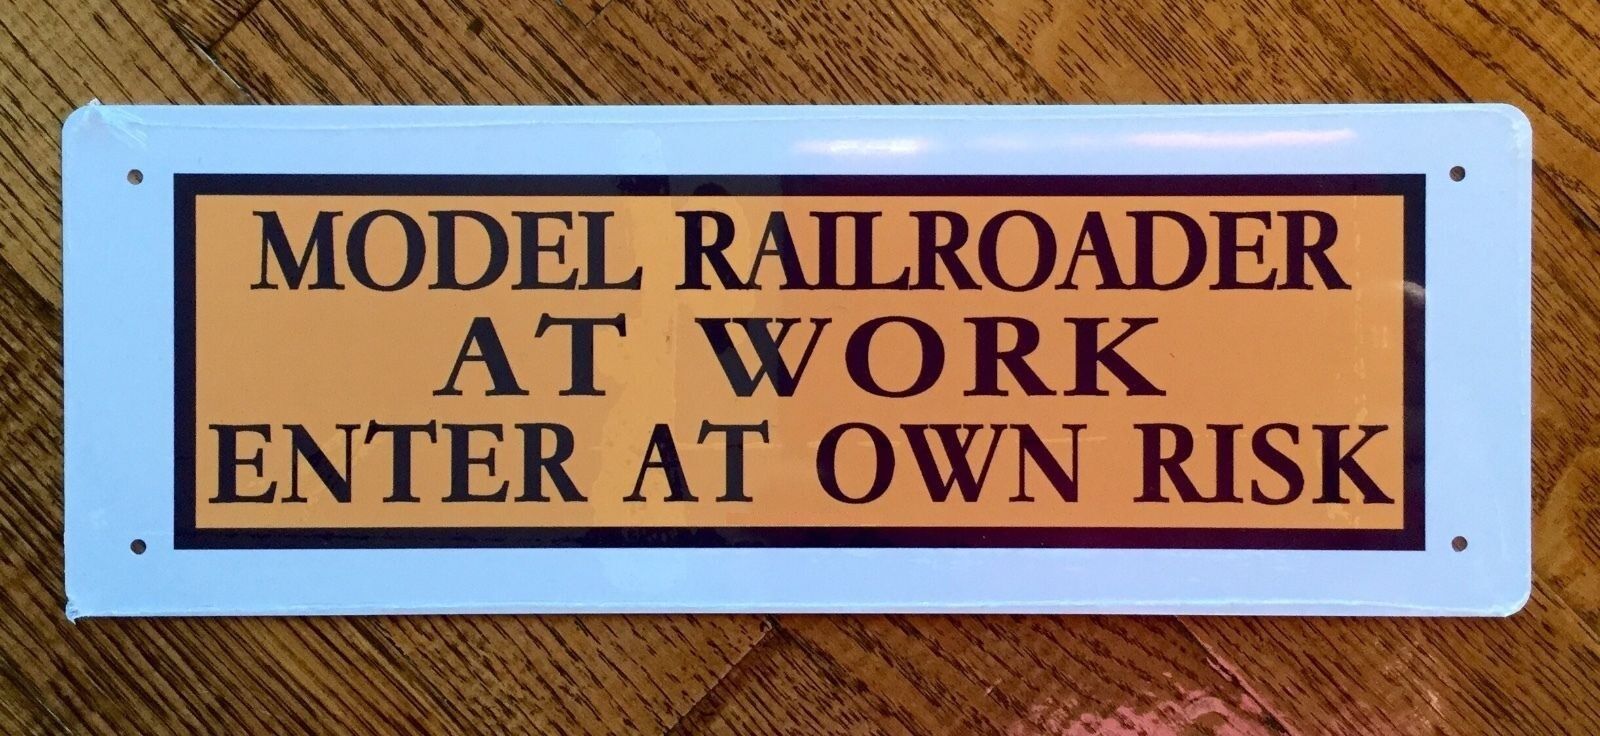 RAILROAD SIGN  - MODEL RAILROADER AT WORK - Great Train Art Gift for Grandpa